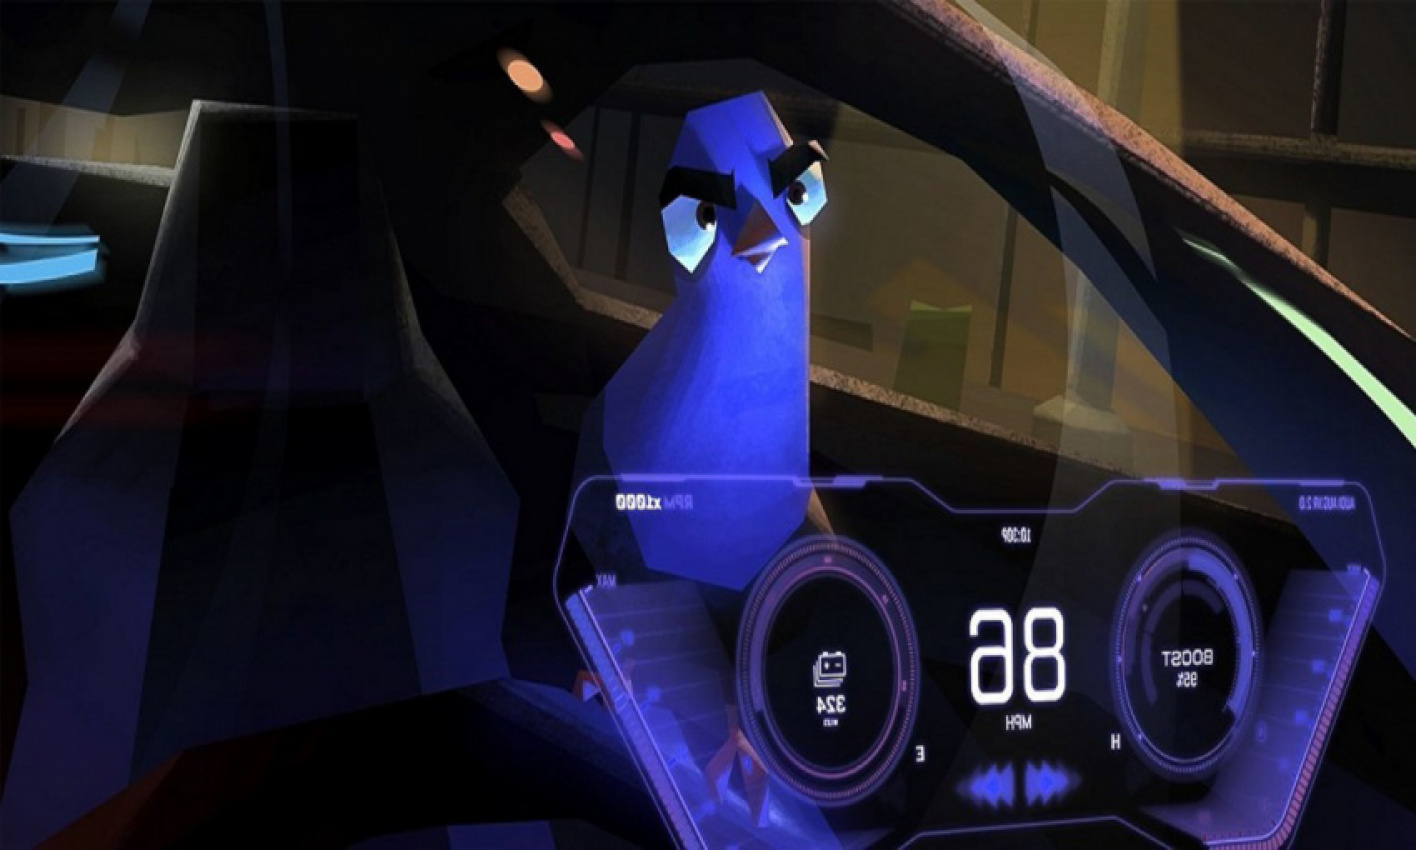 audi, autos, cars, audi animated virtual concept car, audi movie car, audi rsq e-tron, audi spies in disguise, audi virtual concept car, spies in disguise, audi designs first animated virtual car for movie